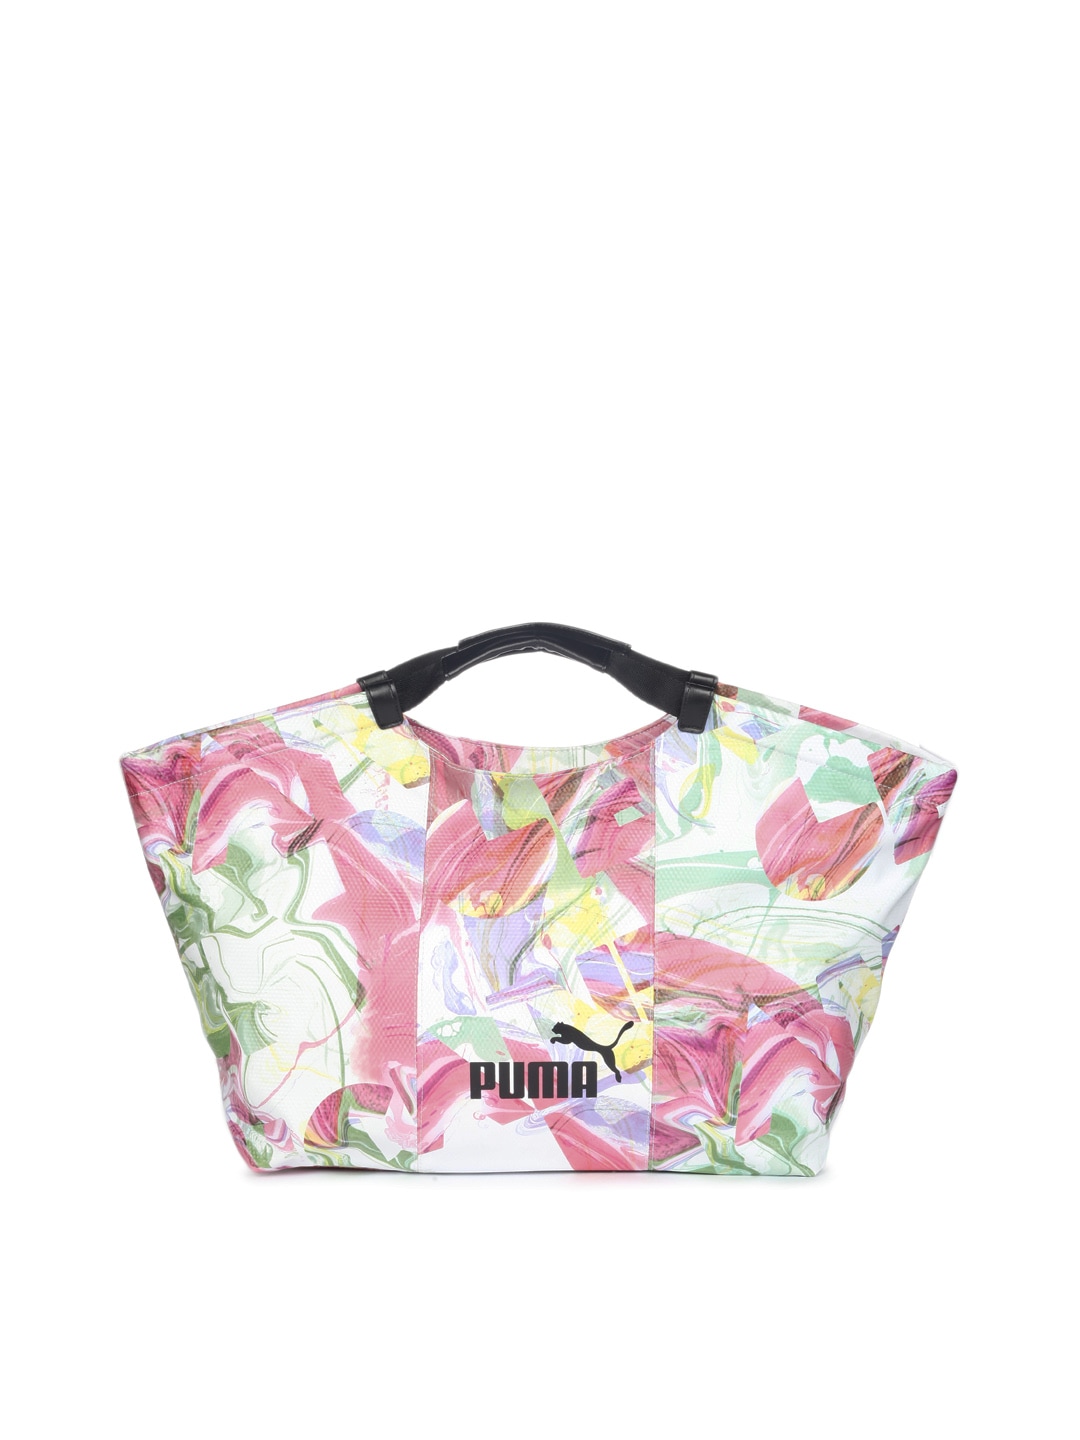 Puma Women Dizzy Shopper Multi Colour Handbag